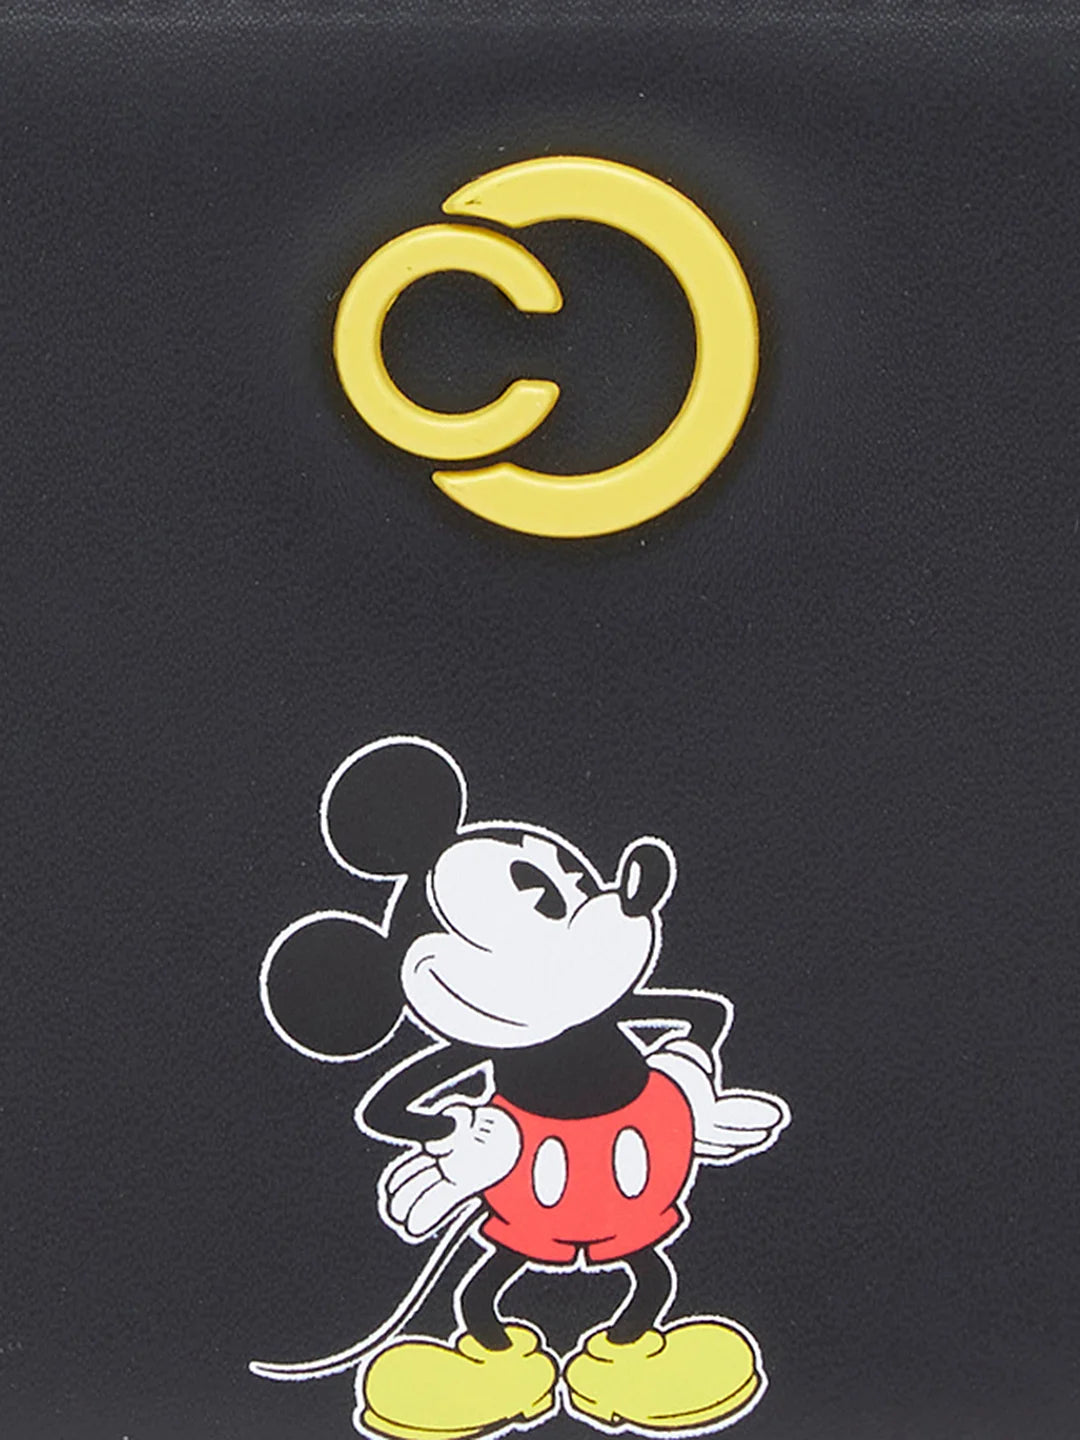 Mickey Mouse wallpaper BW by BlackMoonDream on DeviantArt